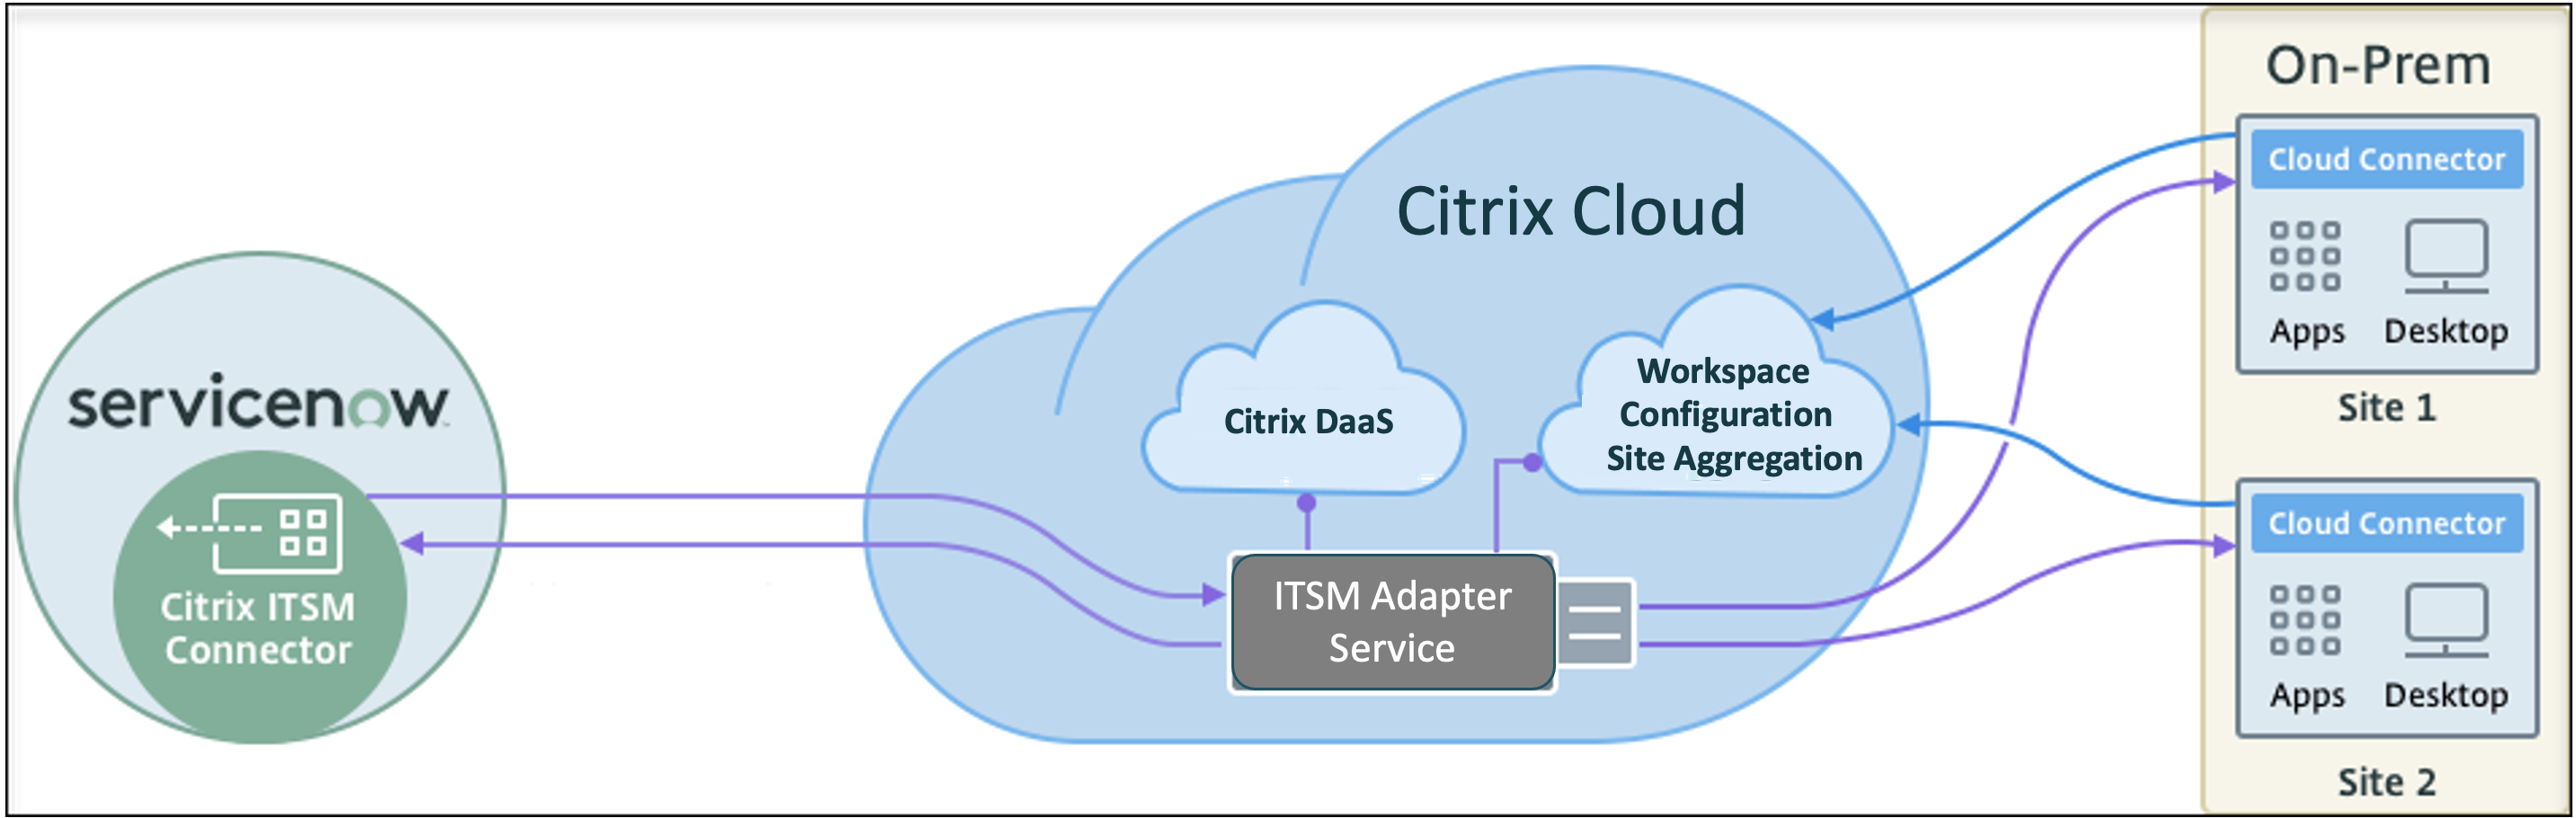 Overview | Citrix ITSM Adapter service